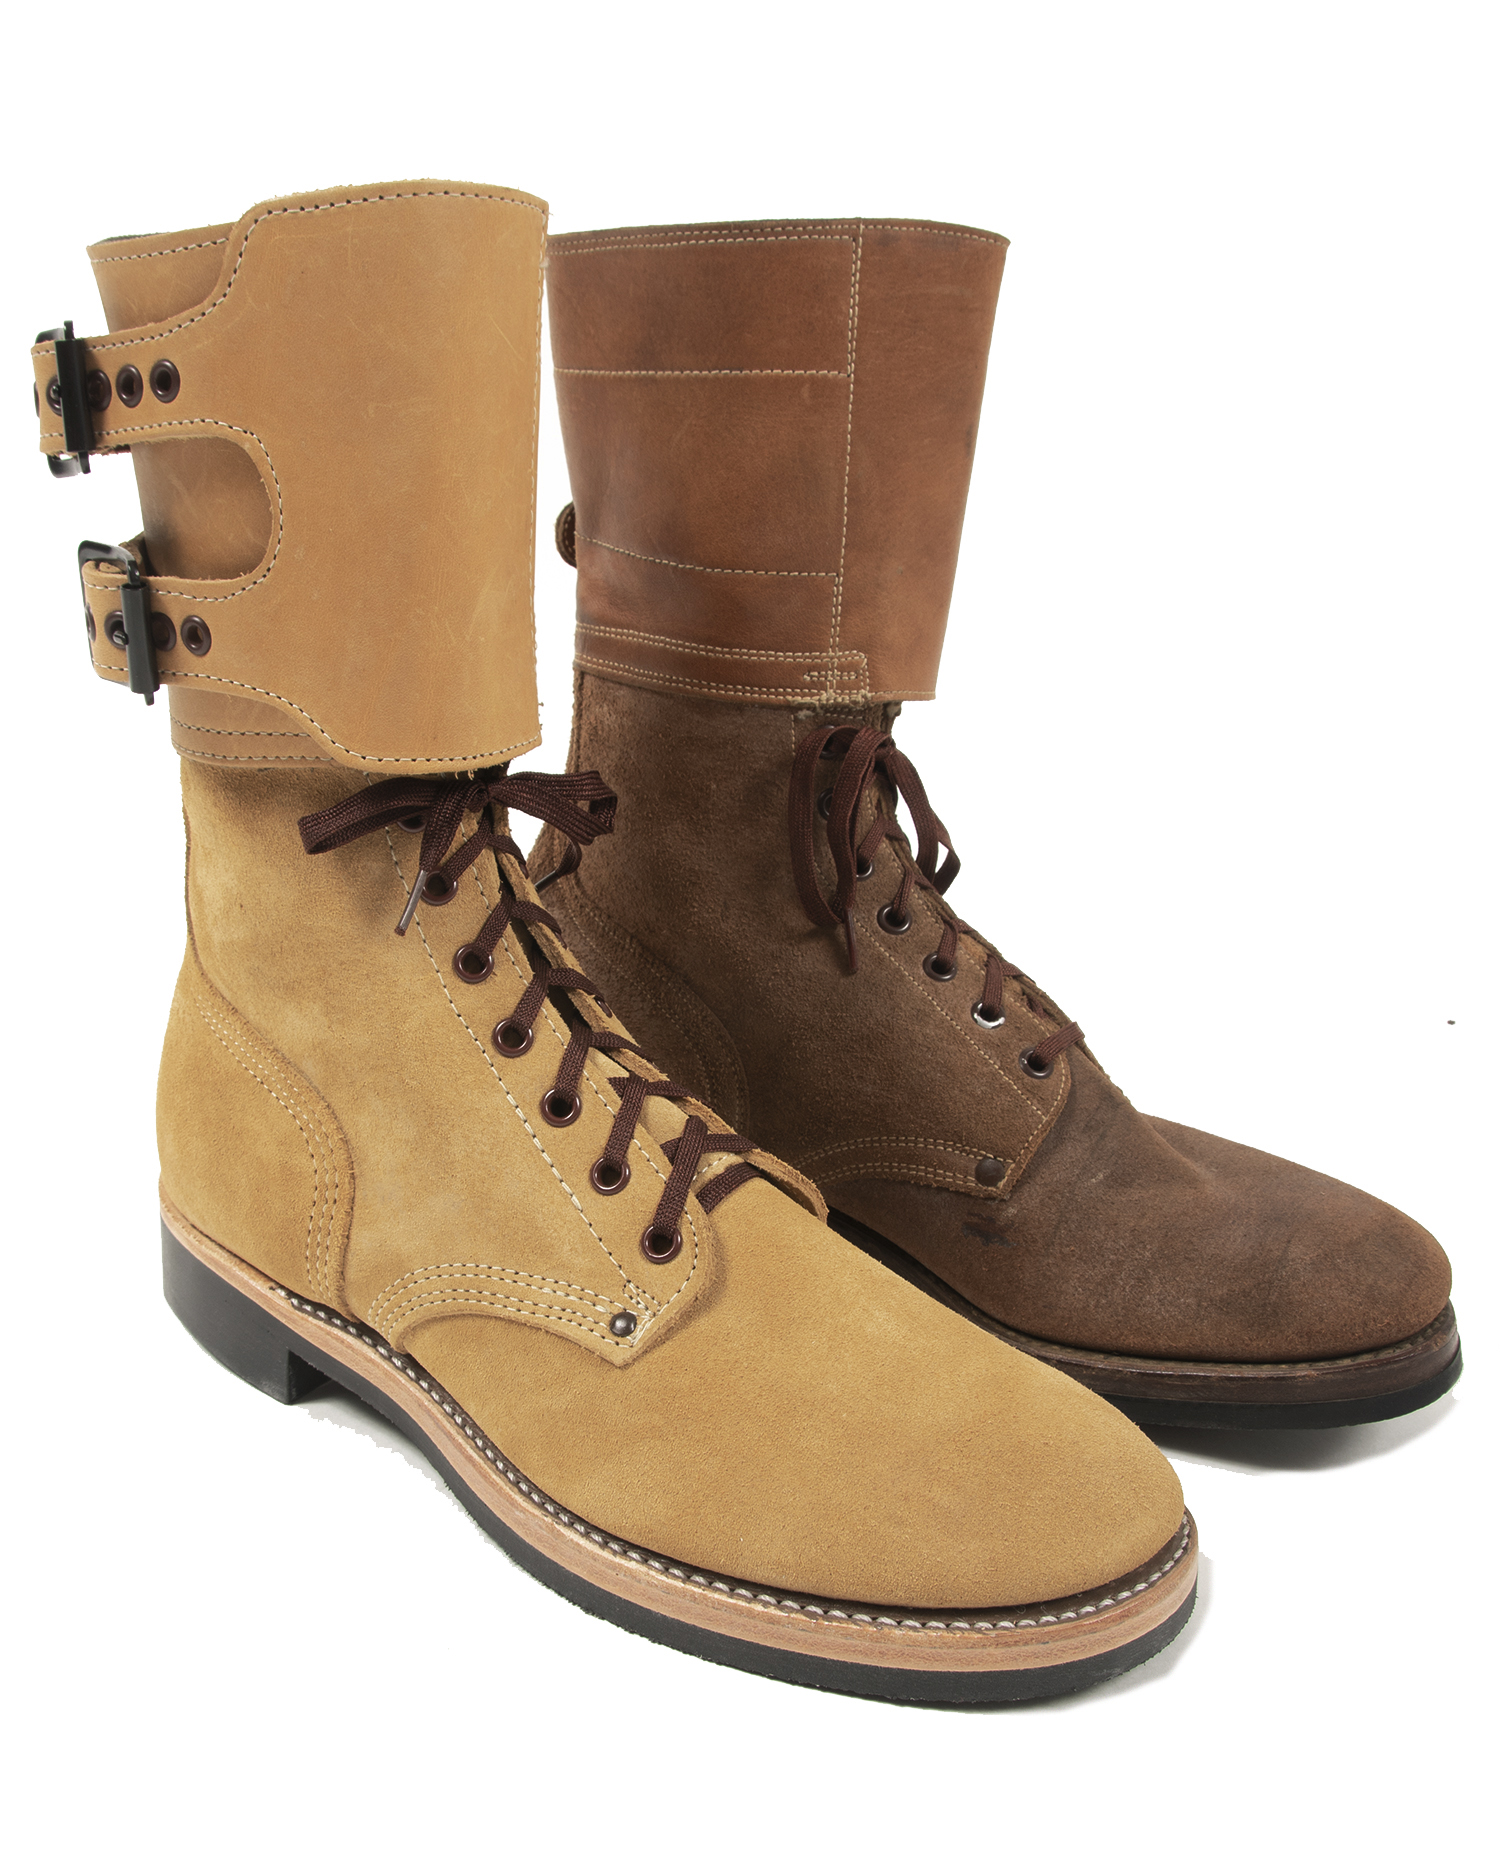 14 1/2 AA WWII Combat Boots 2 Buckle NOS Originals Russet Leather 